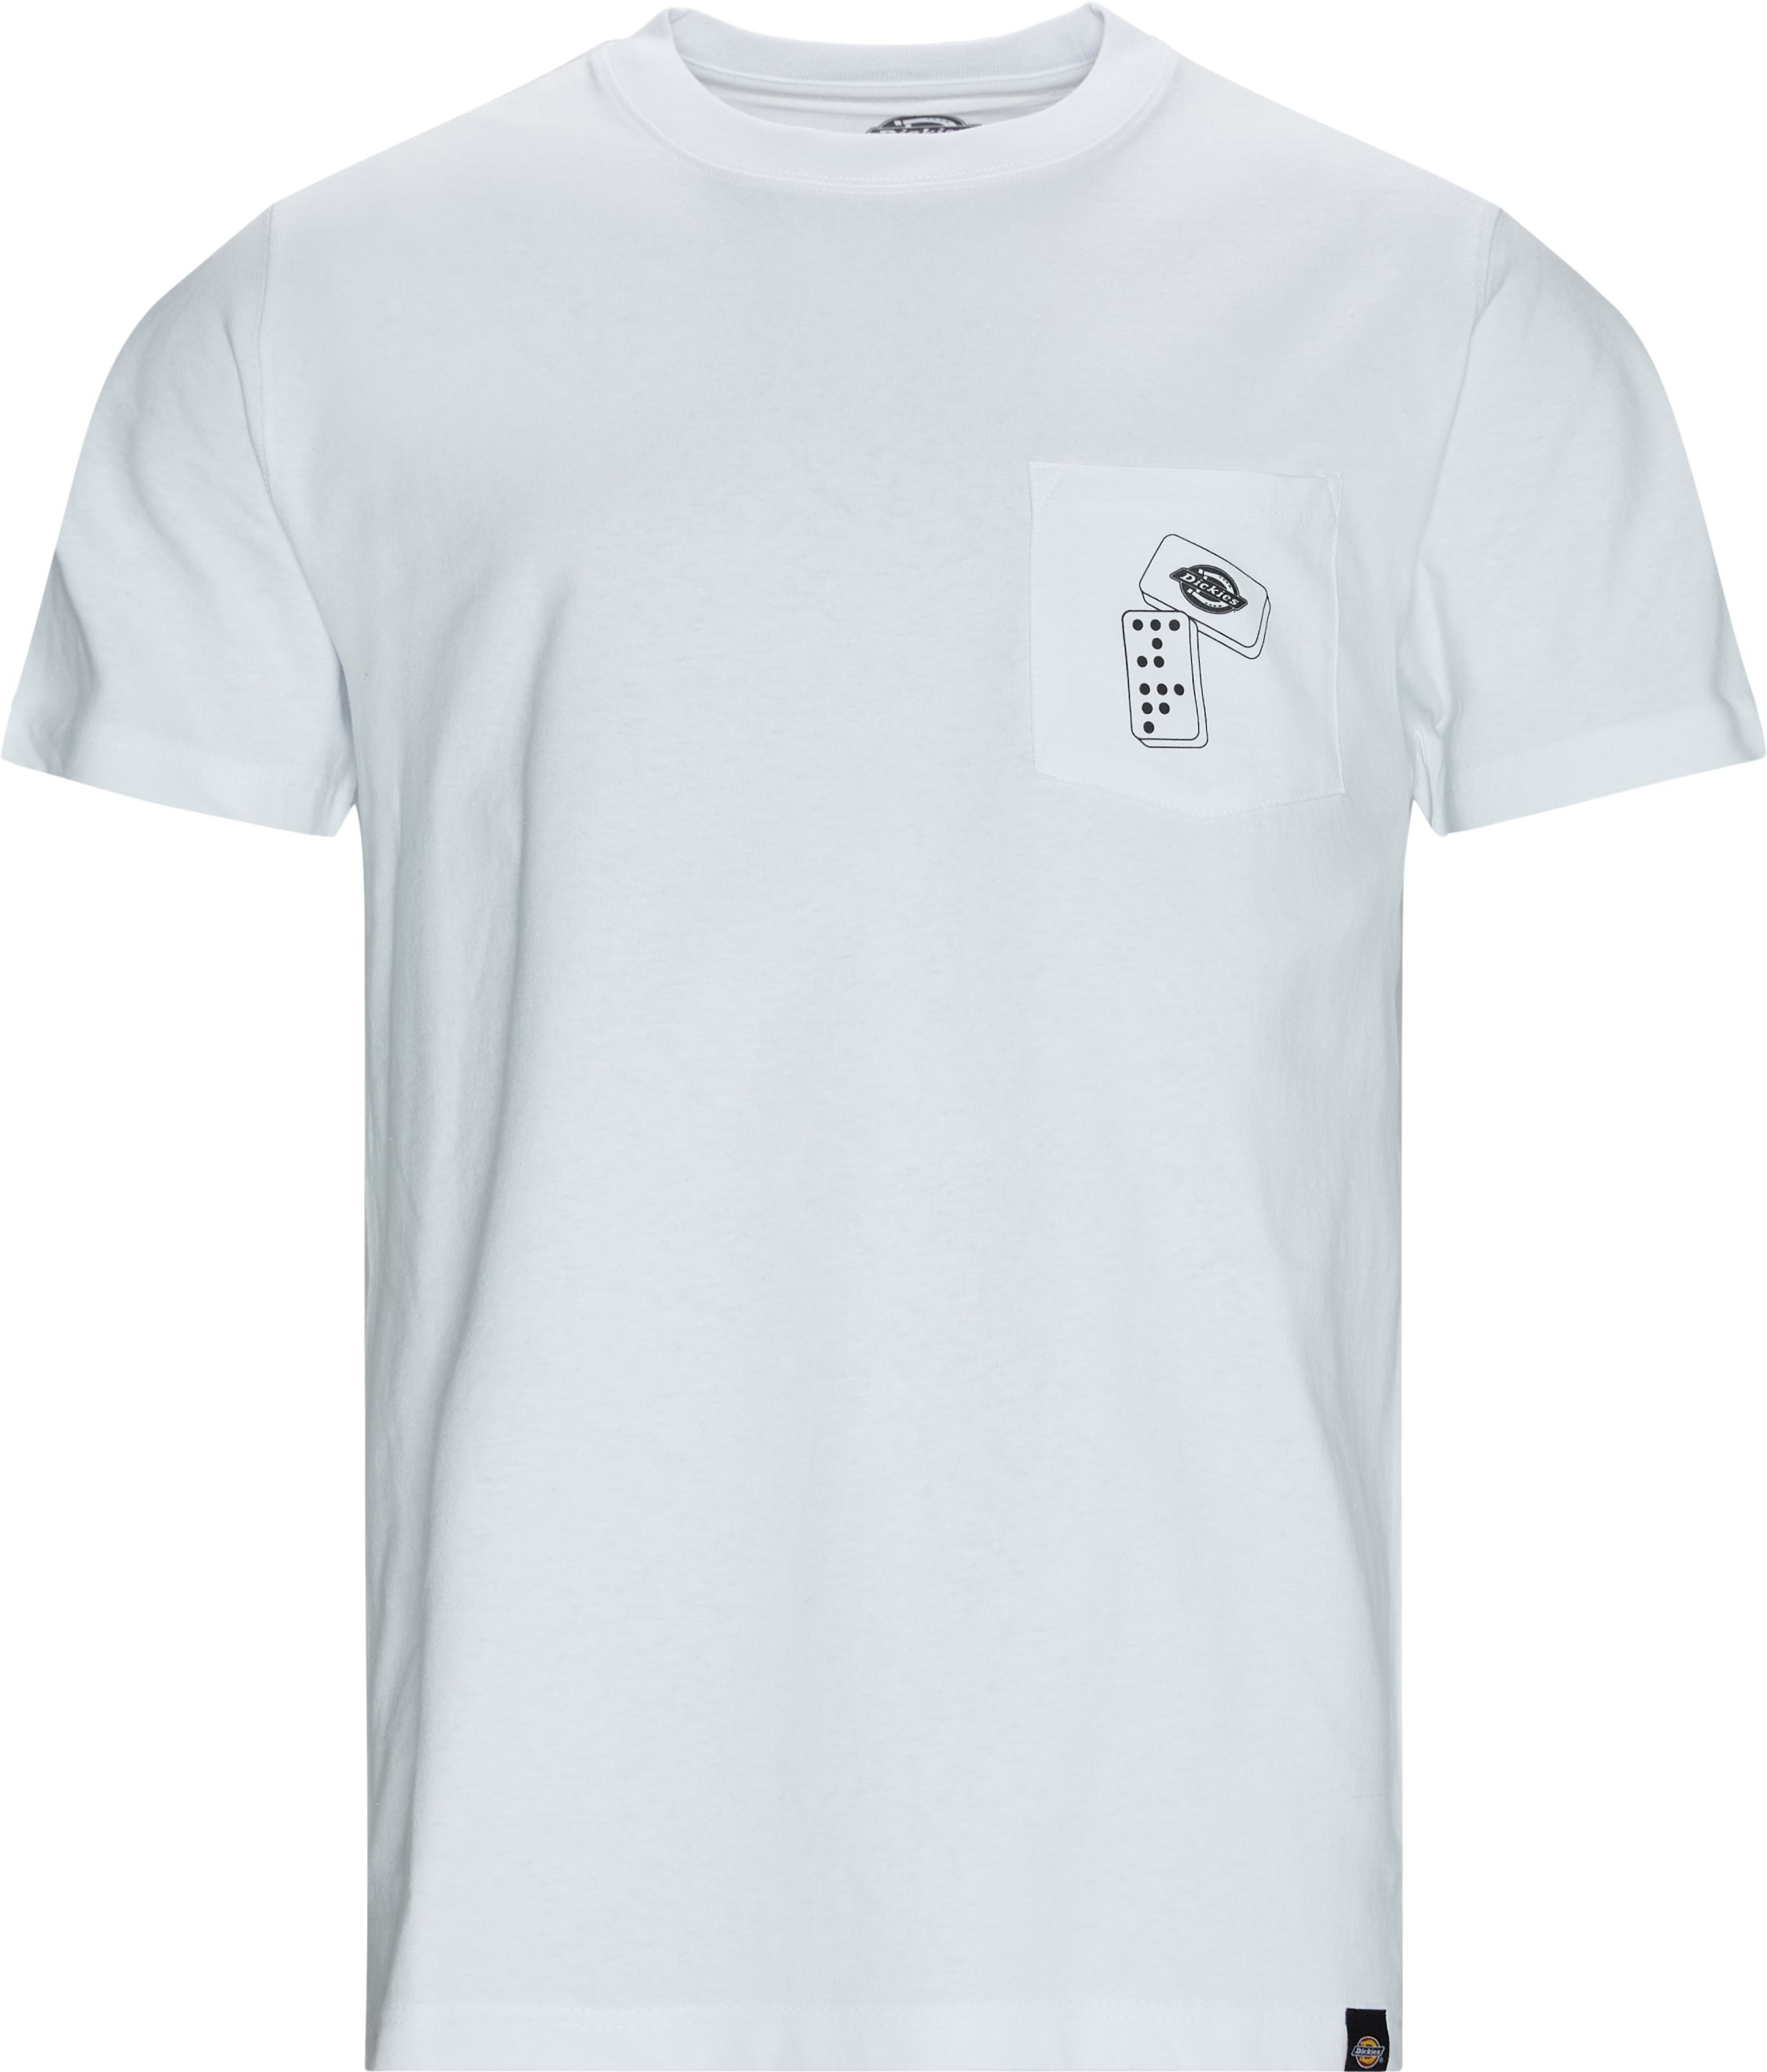 Jf Graphic Tee - T-shirts - Regular fit - Vit